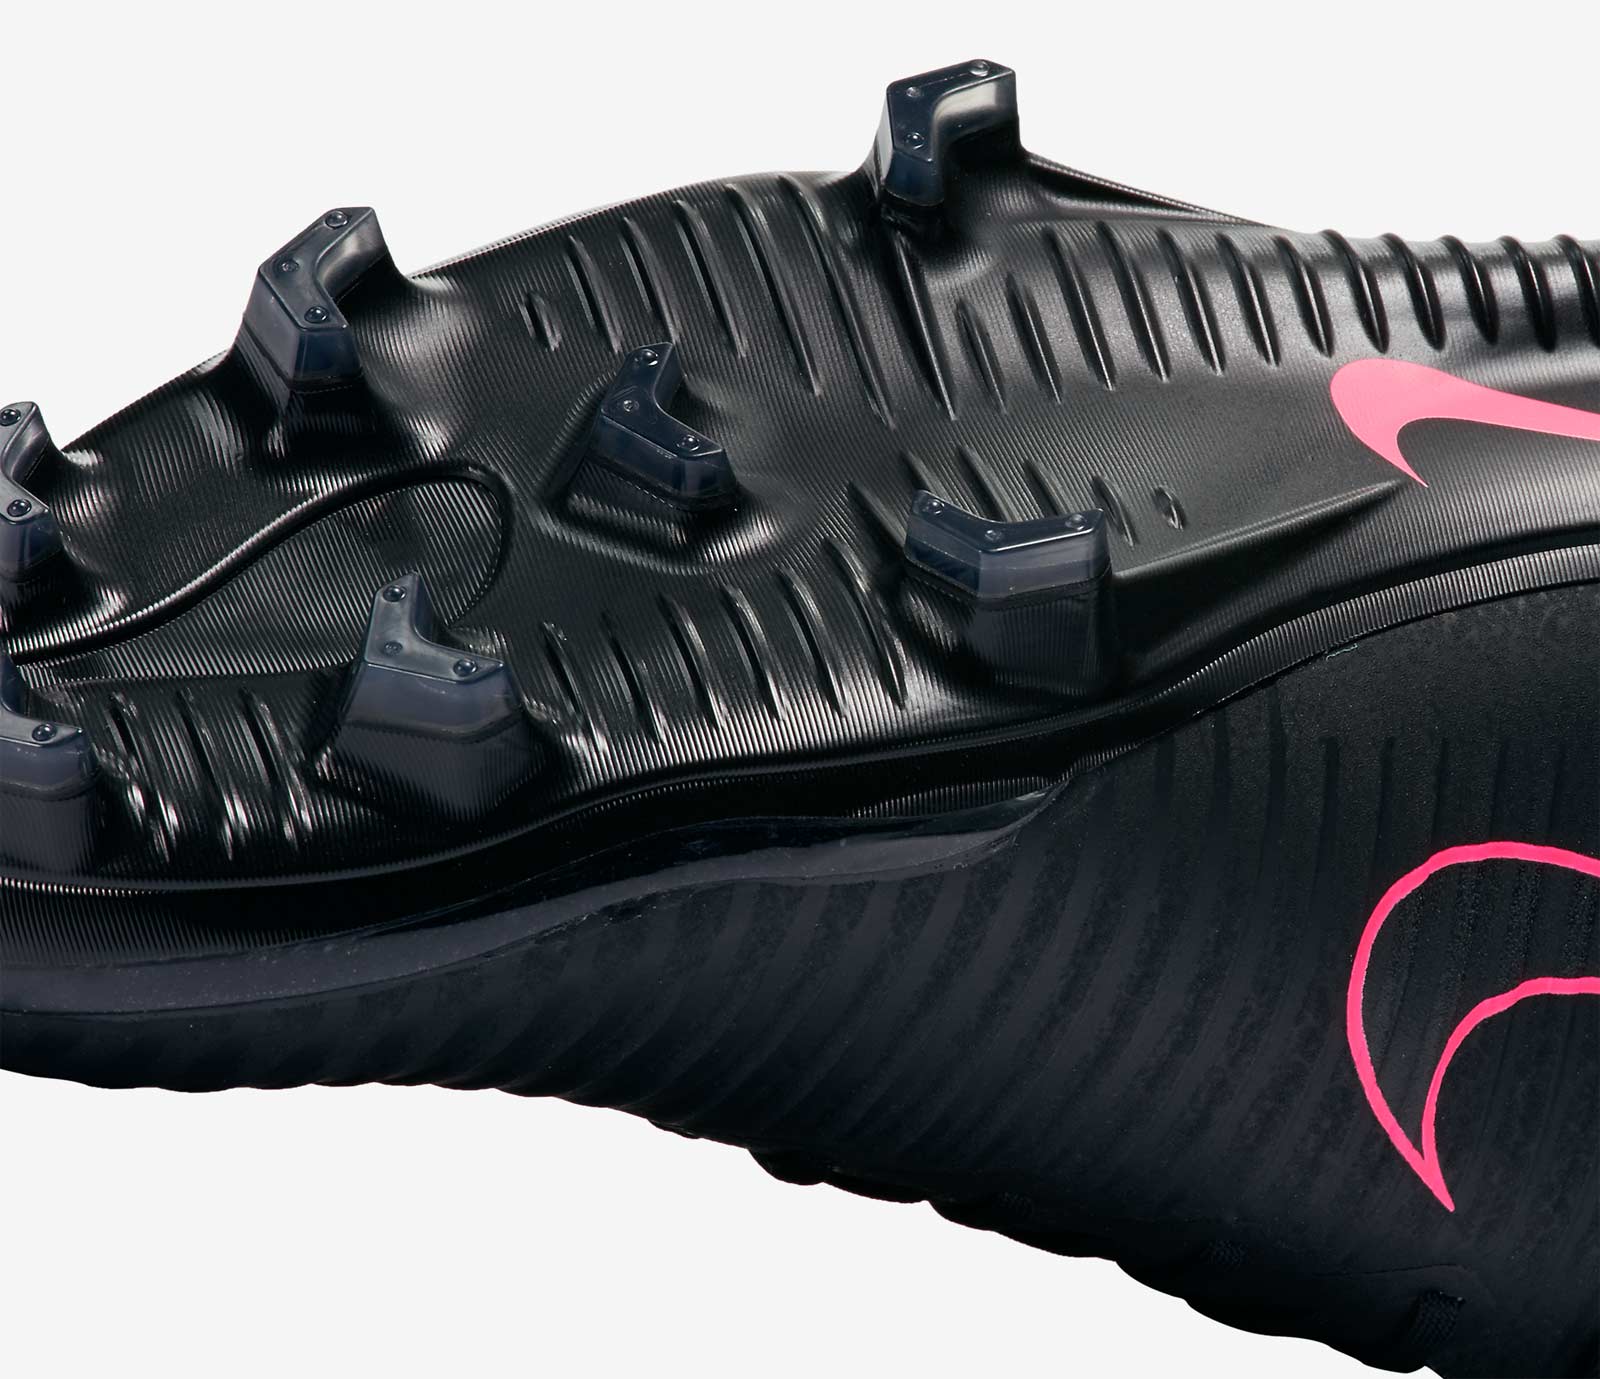 Black & Pink Nike Mercurial Vapor XI 2016-17 Boots Revealed - Footy ...